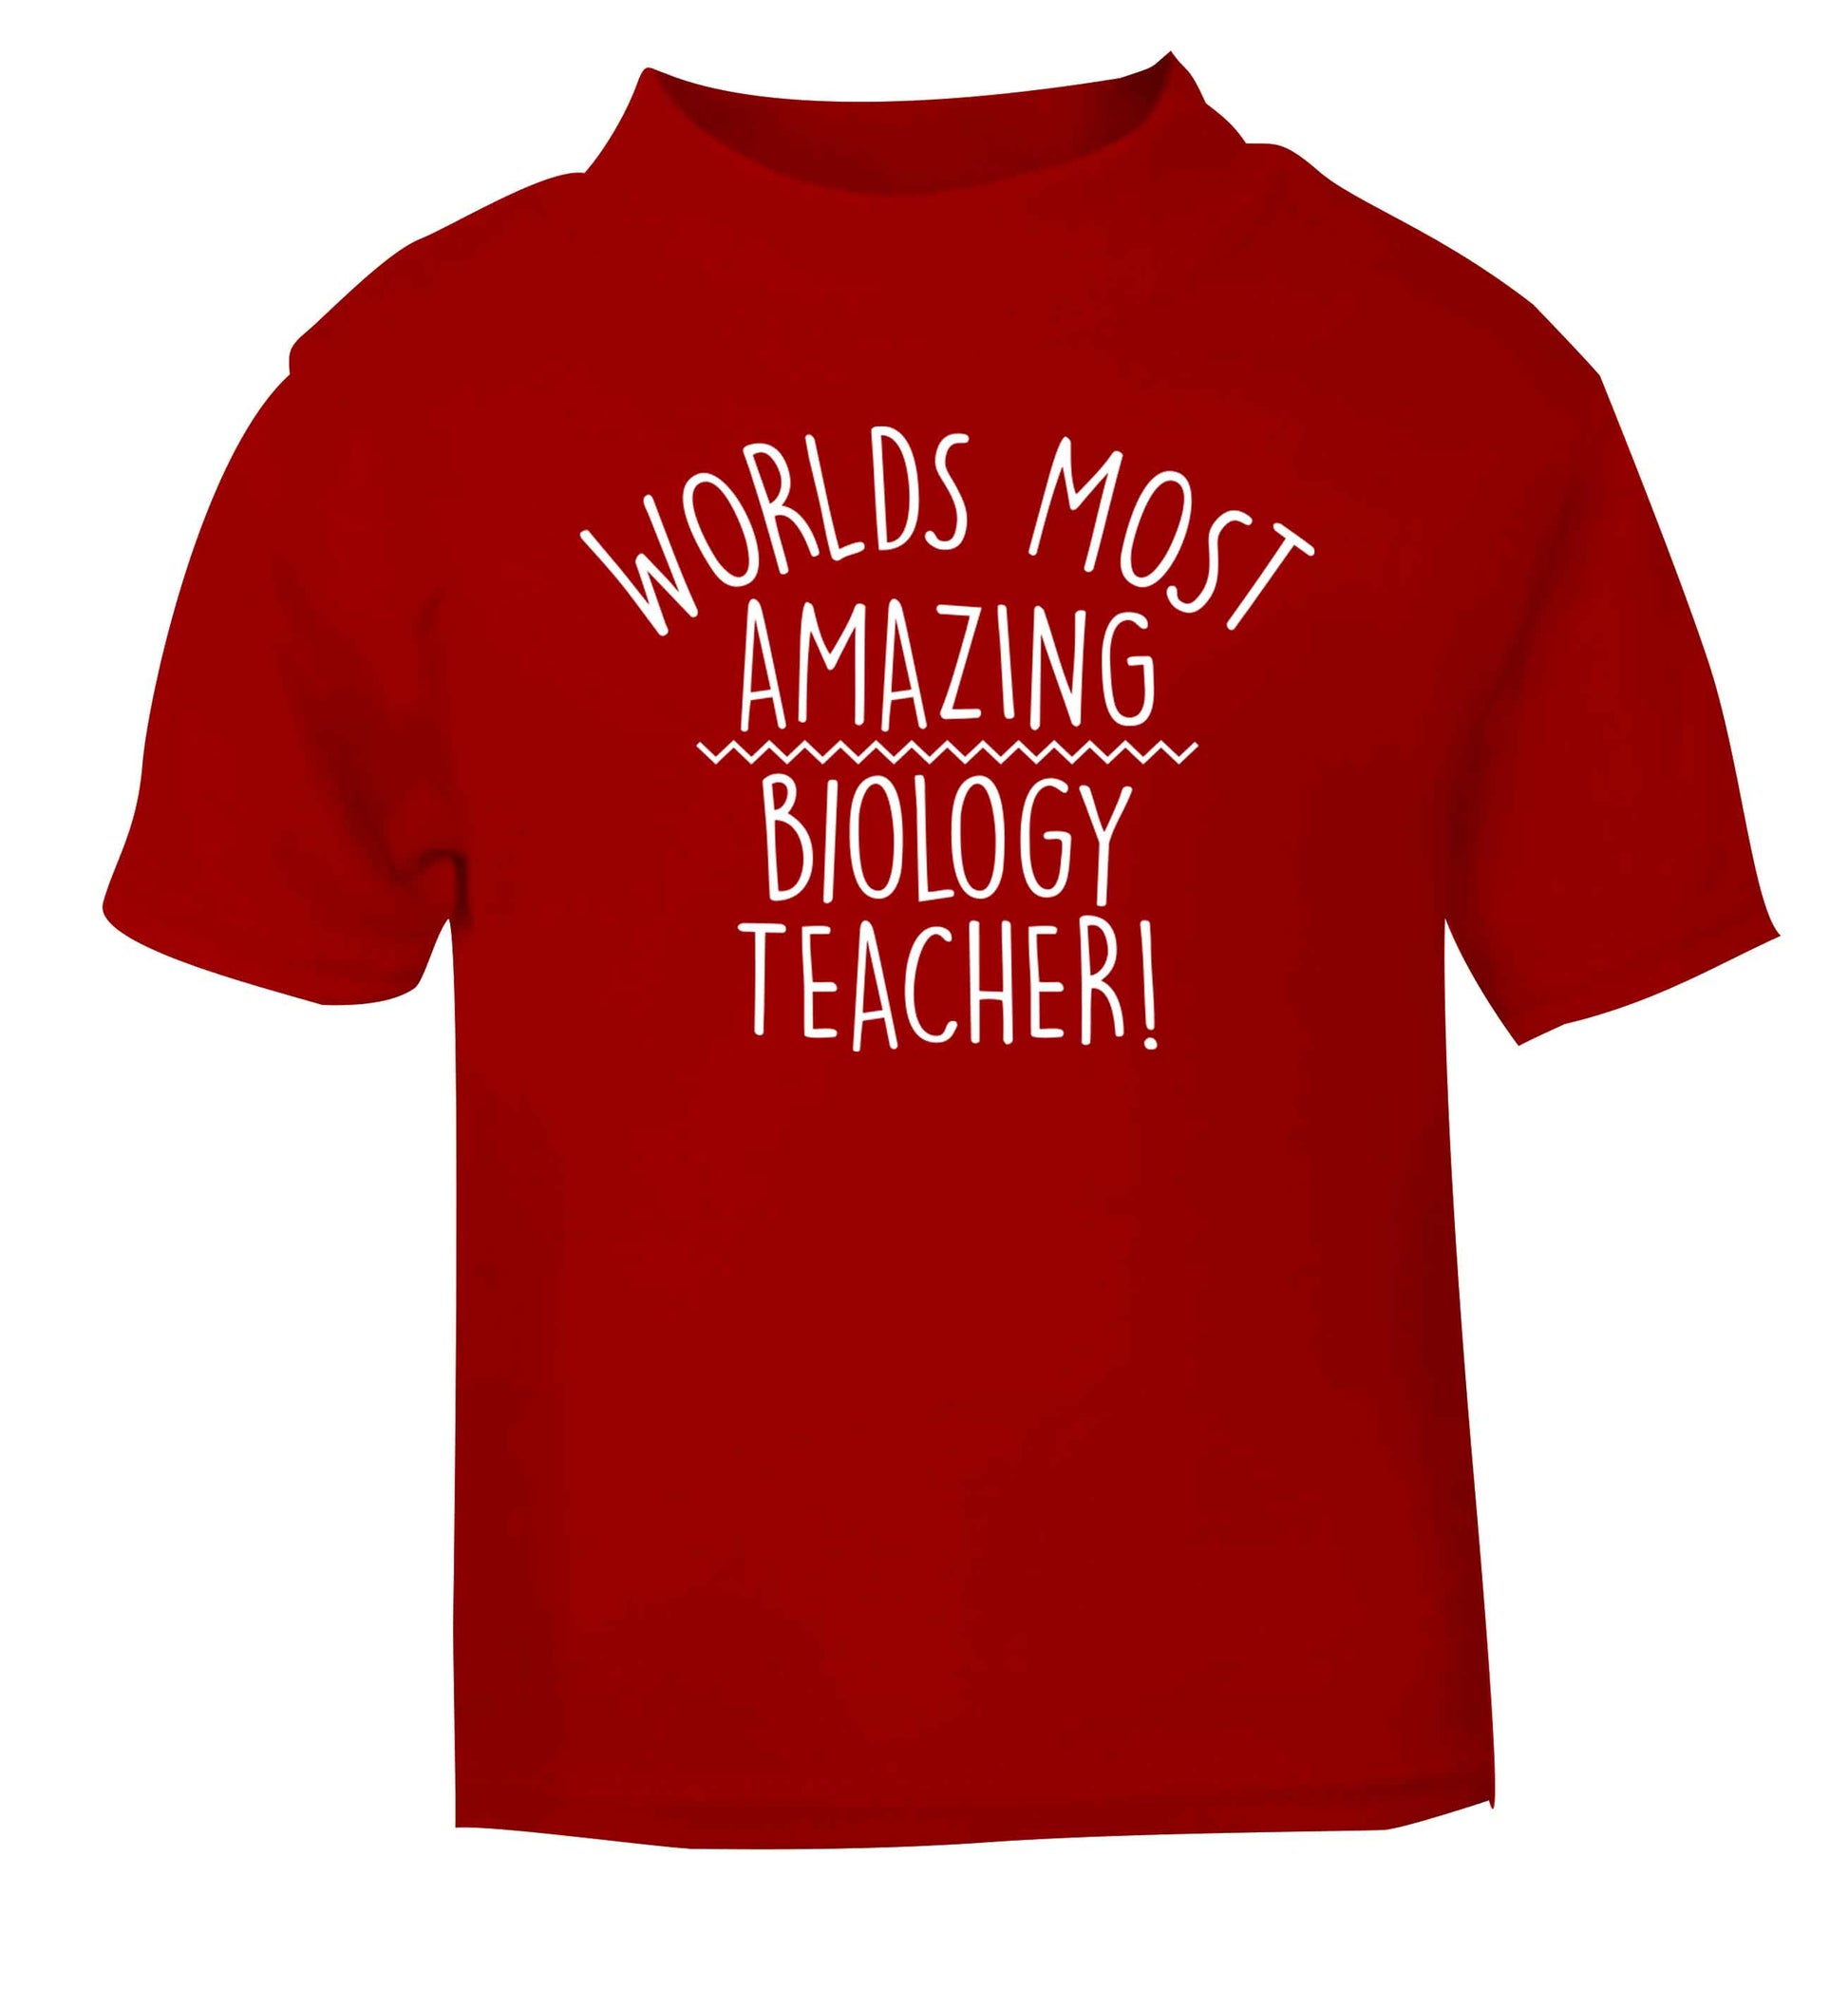 Worlds most amazing biology teacher red baby toddler Tshirt 2 Years